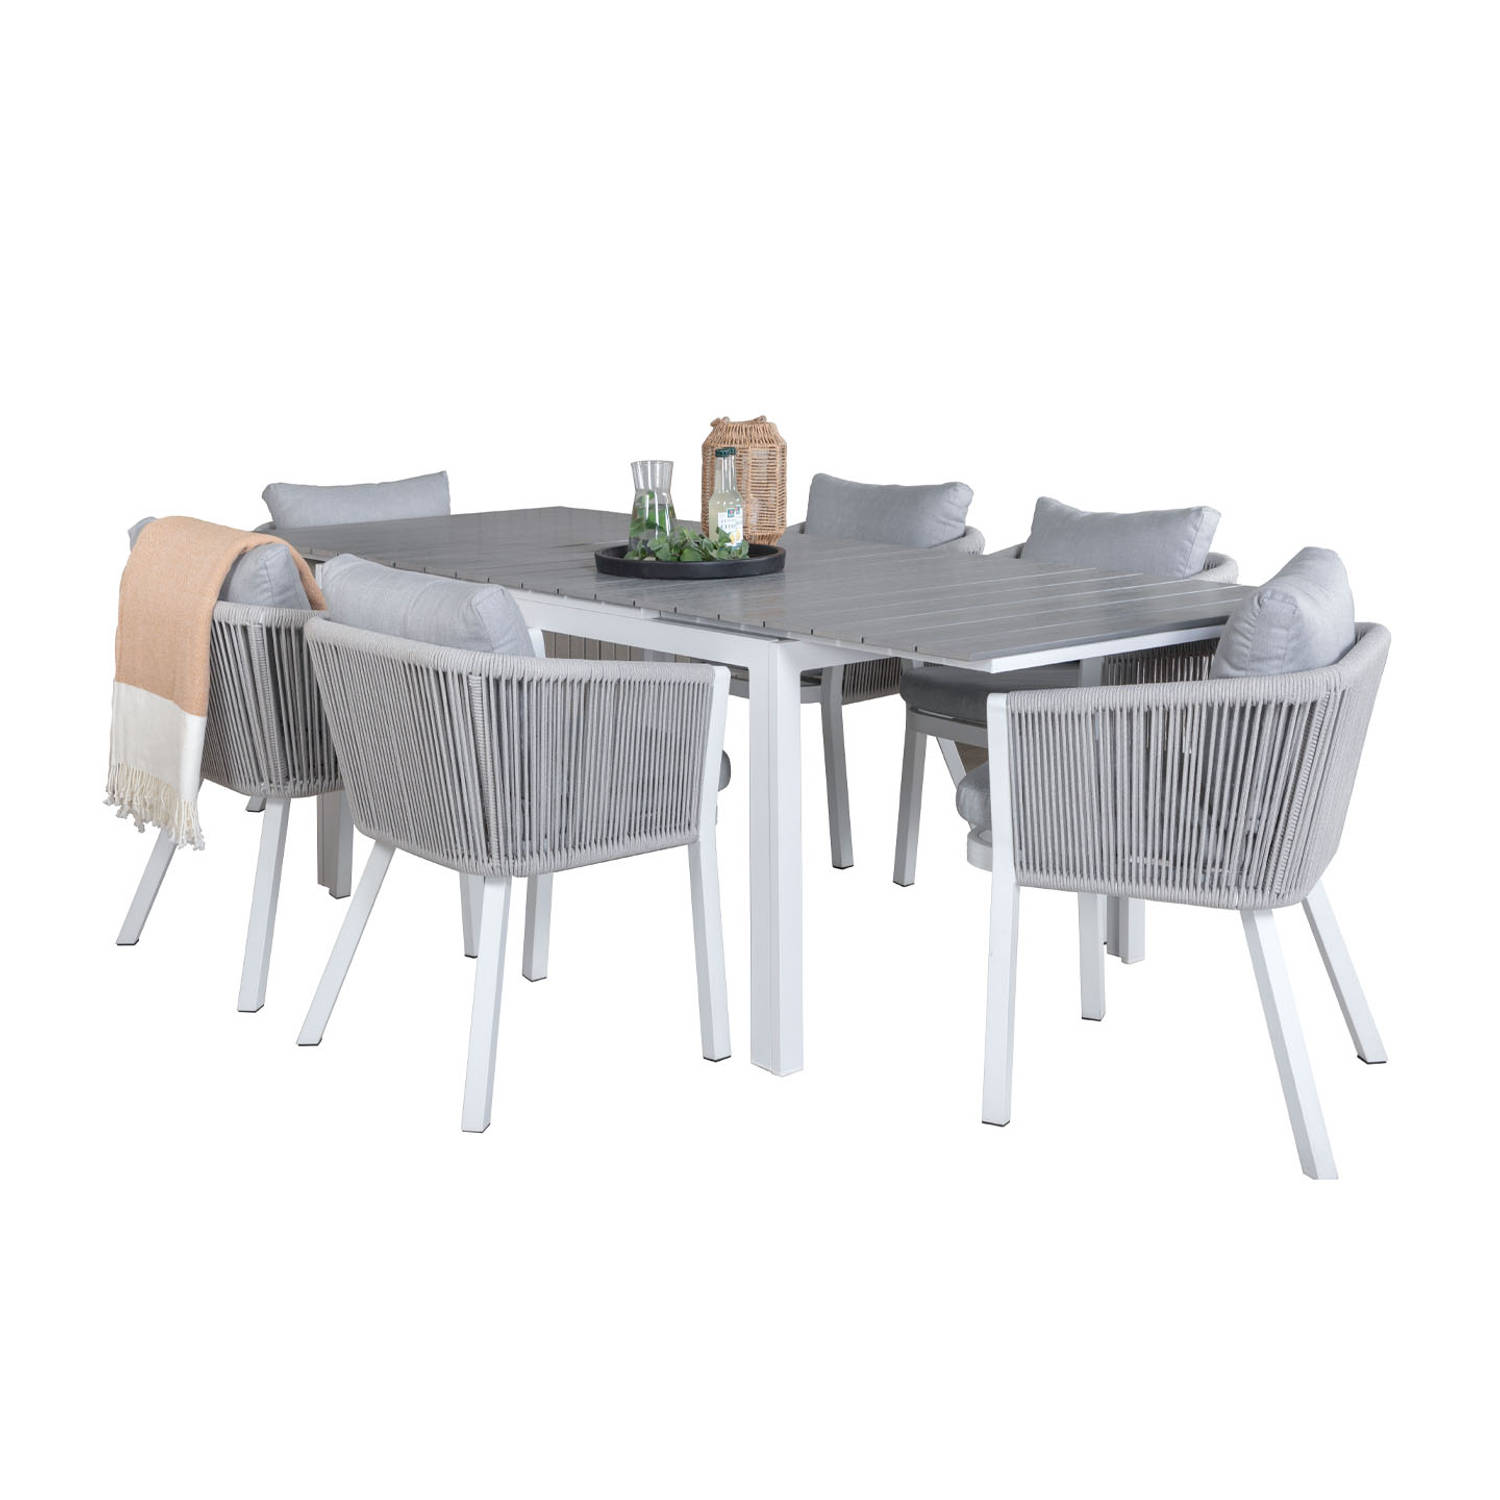 Levels tuinmeubelset tafel 100x160/240cm en 6 stoel Virya wit, grijs.